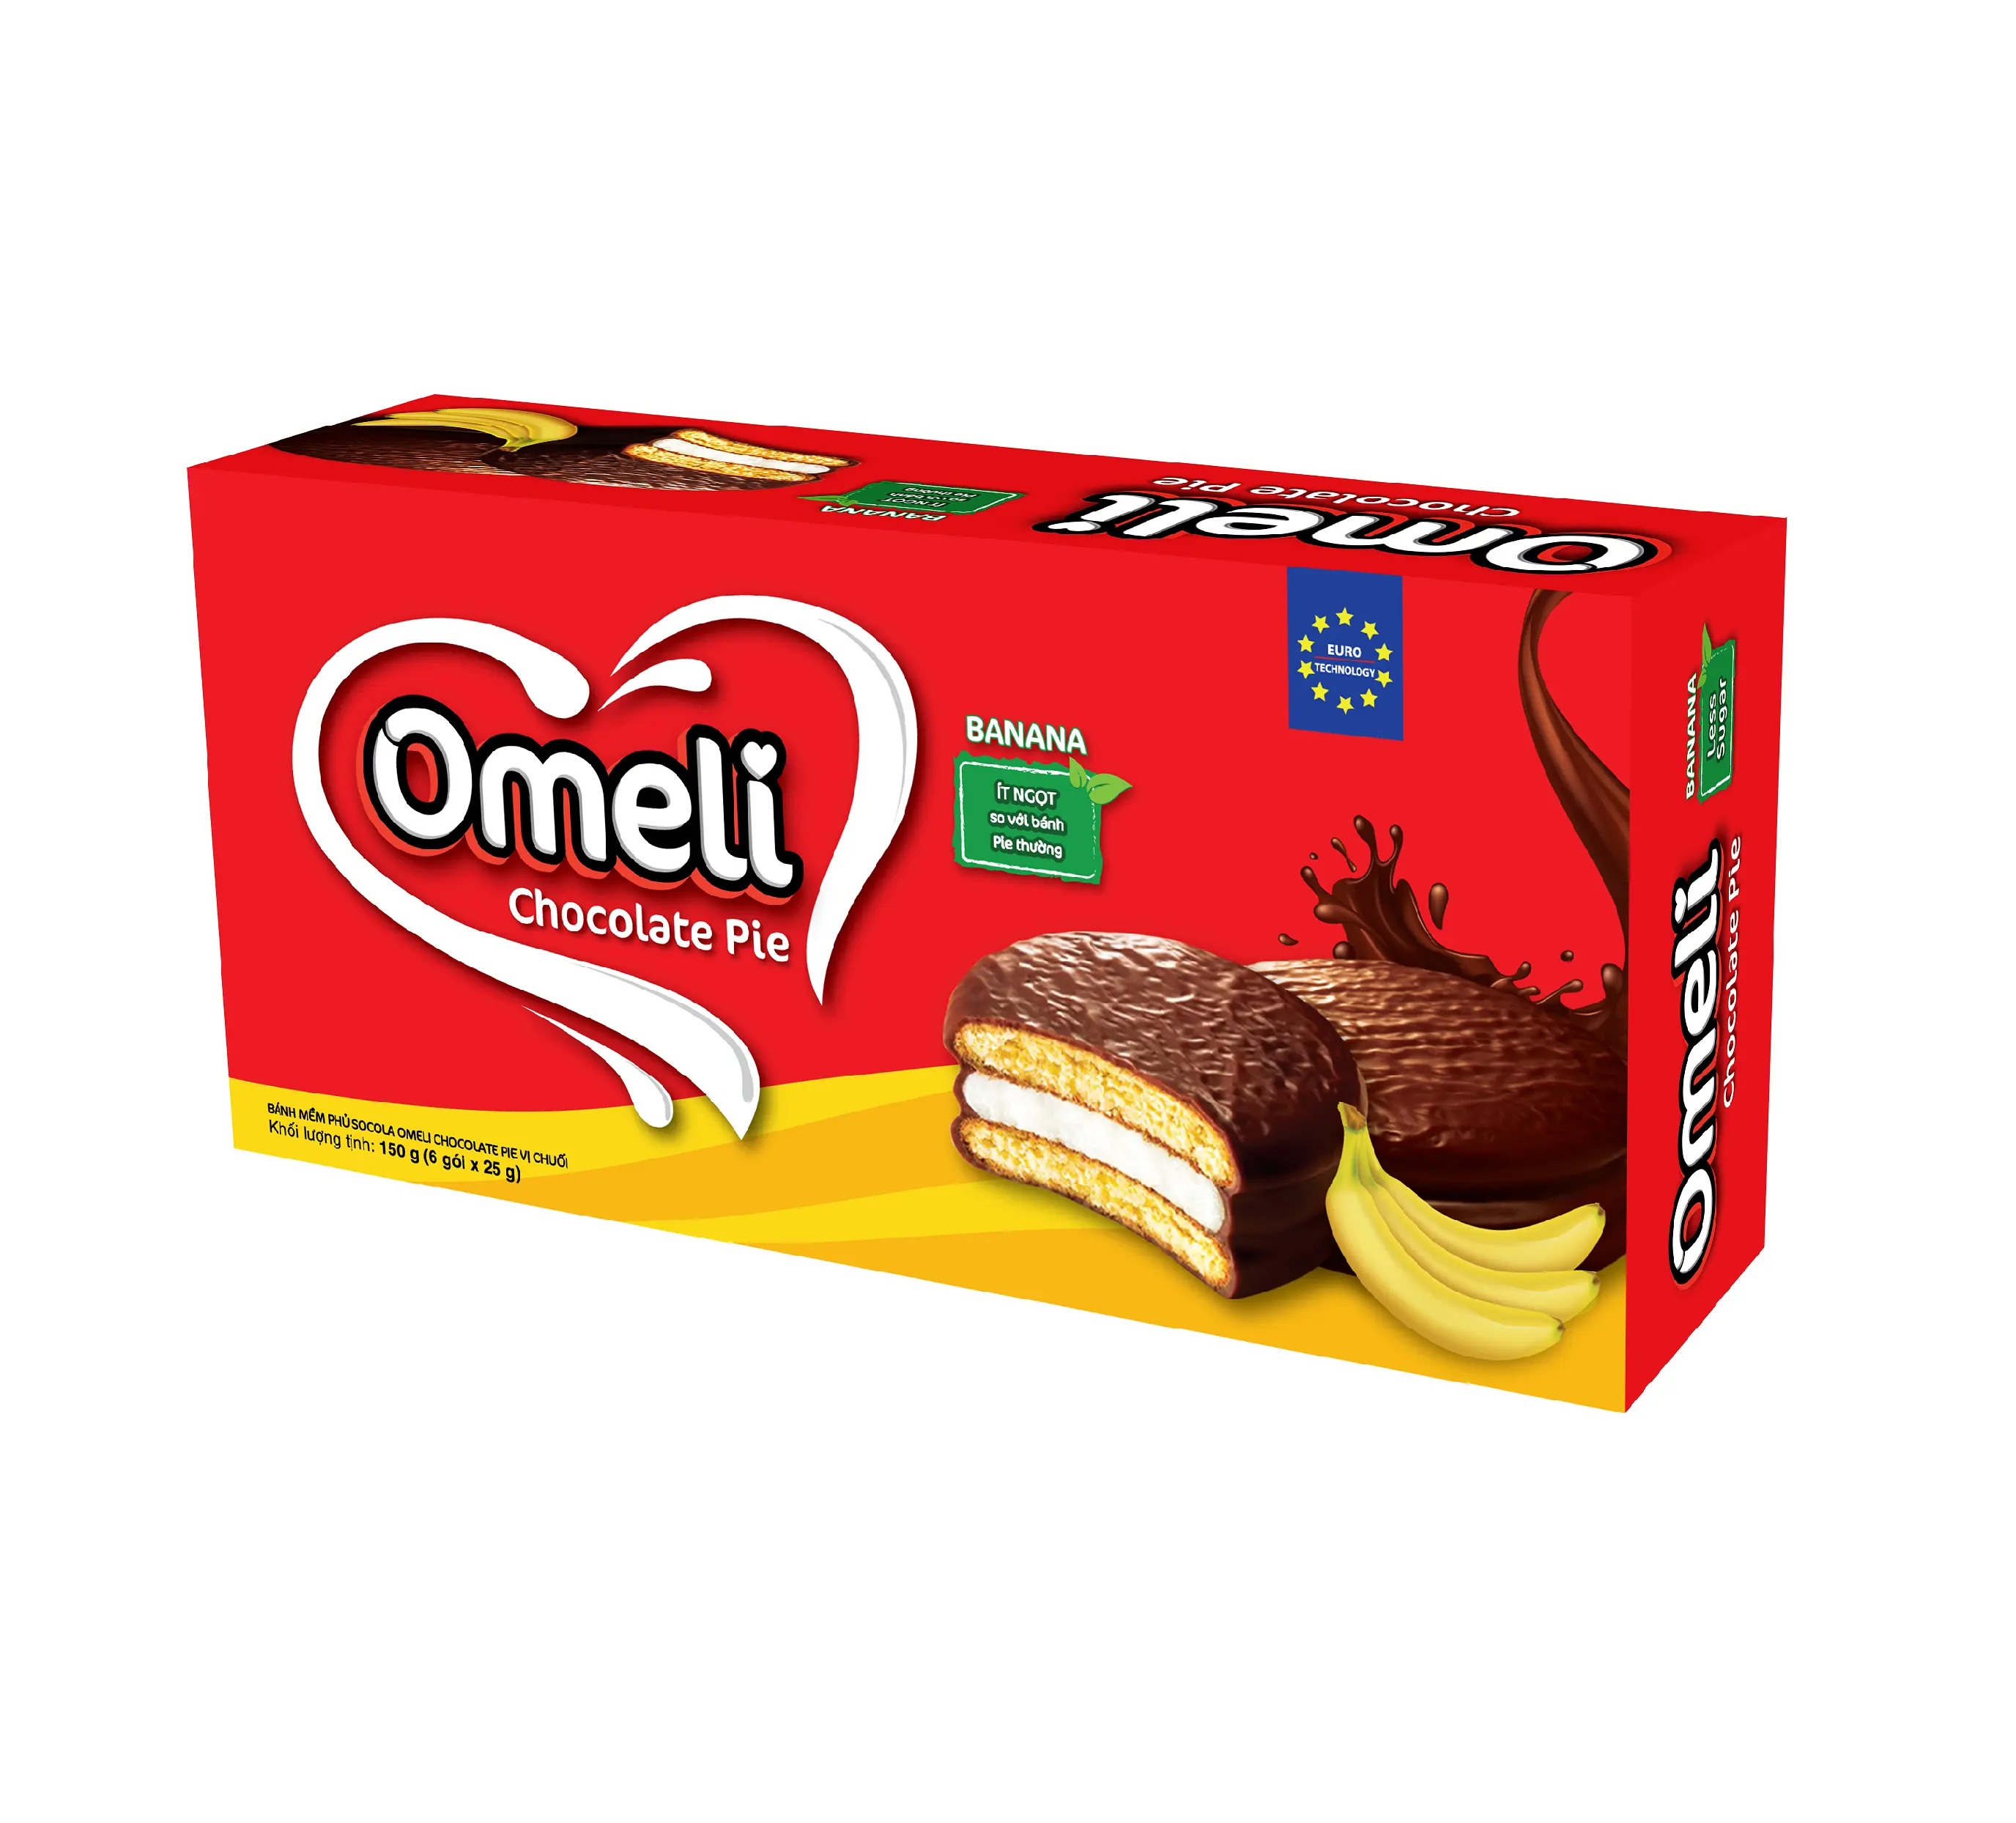 Premium-Qualität Hot Selling Neues Produkt Marke Omeli Schokoladen kuchen/Chocopie 150g-Bananen geschmack-Verpackt in Papier box